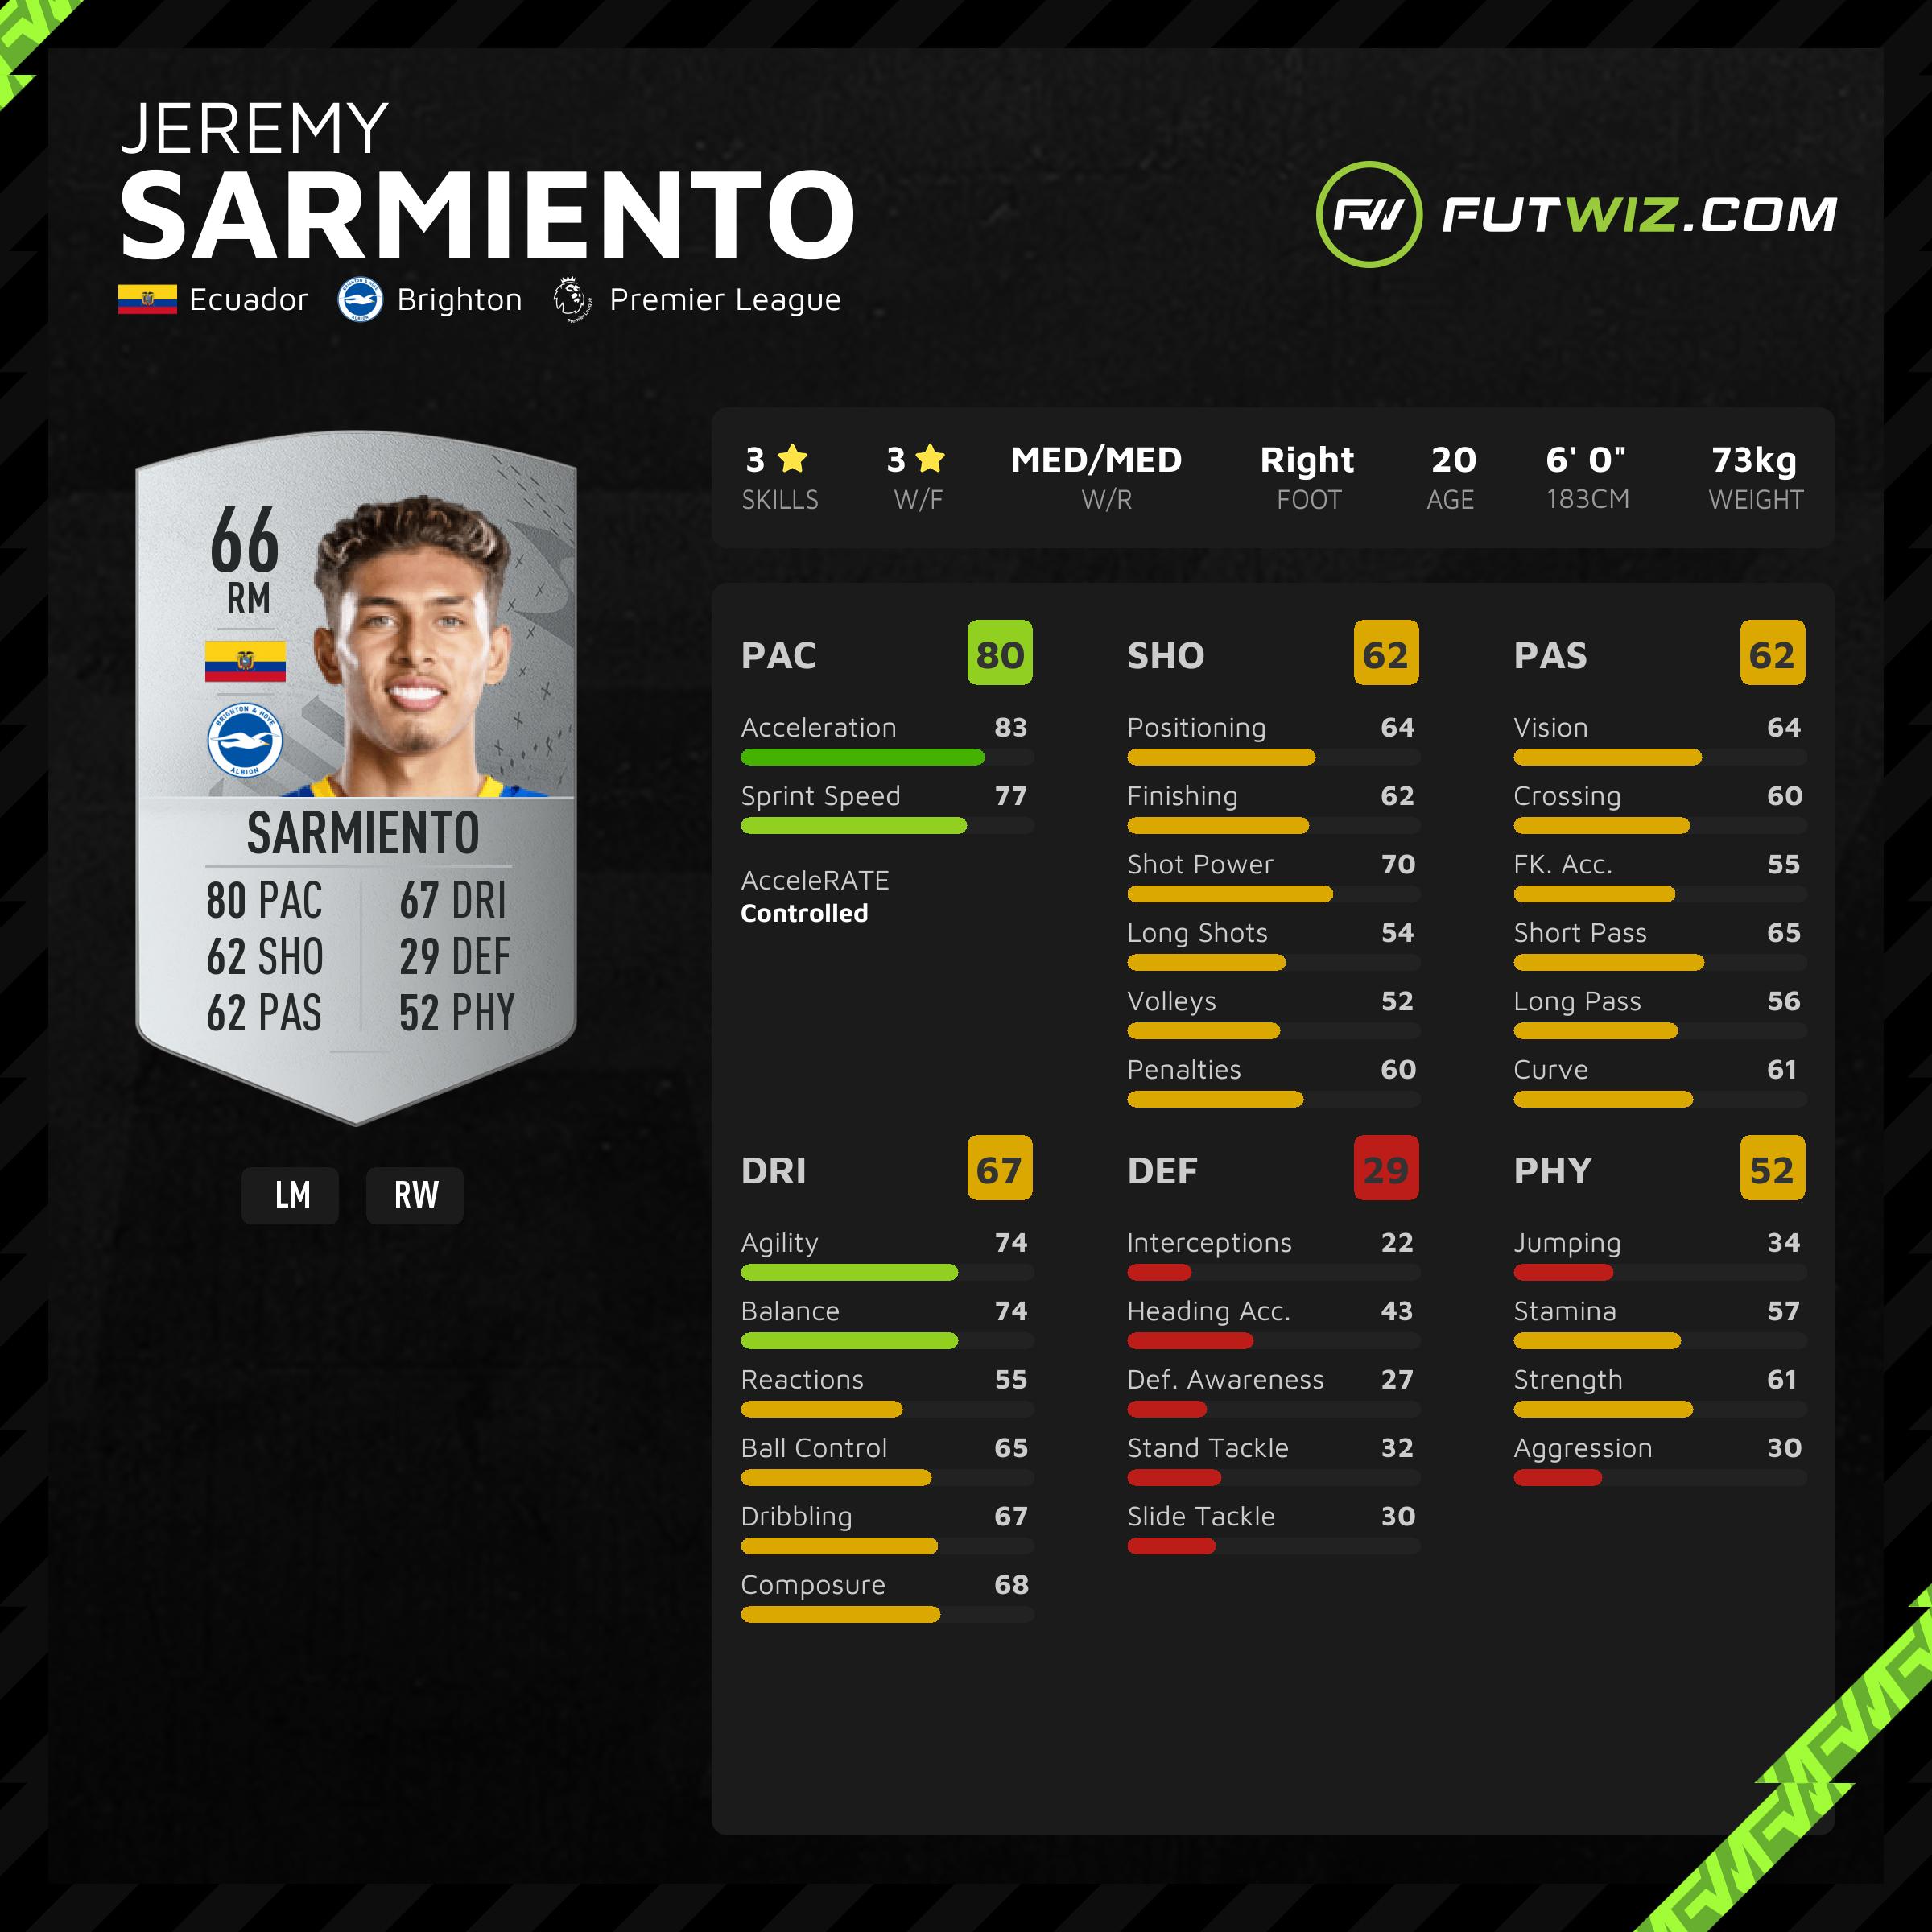 Jeremy Sarmiento in profile